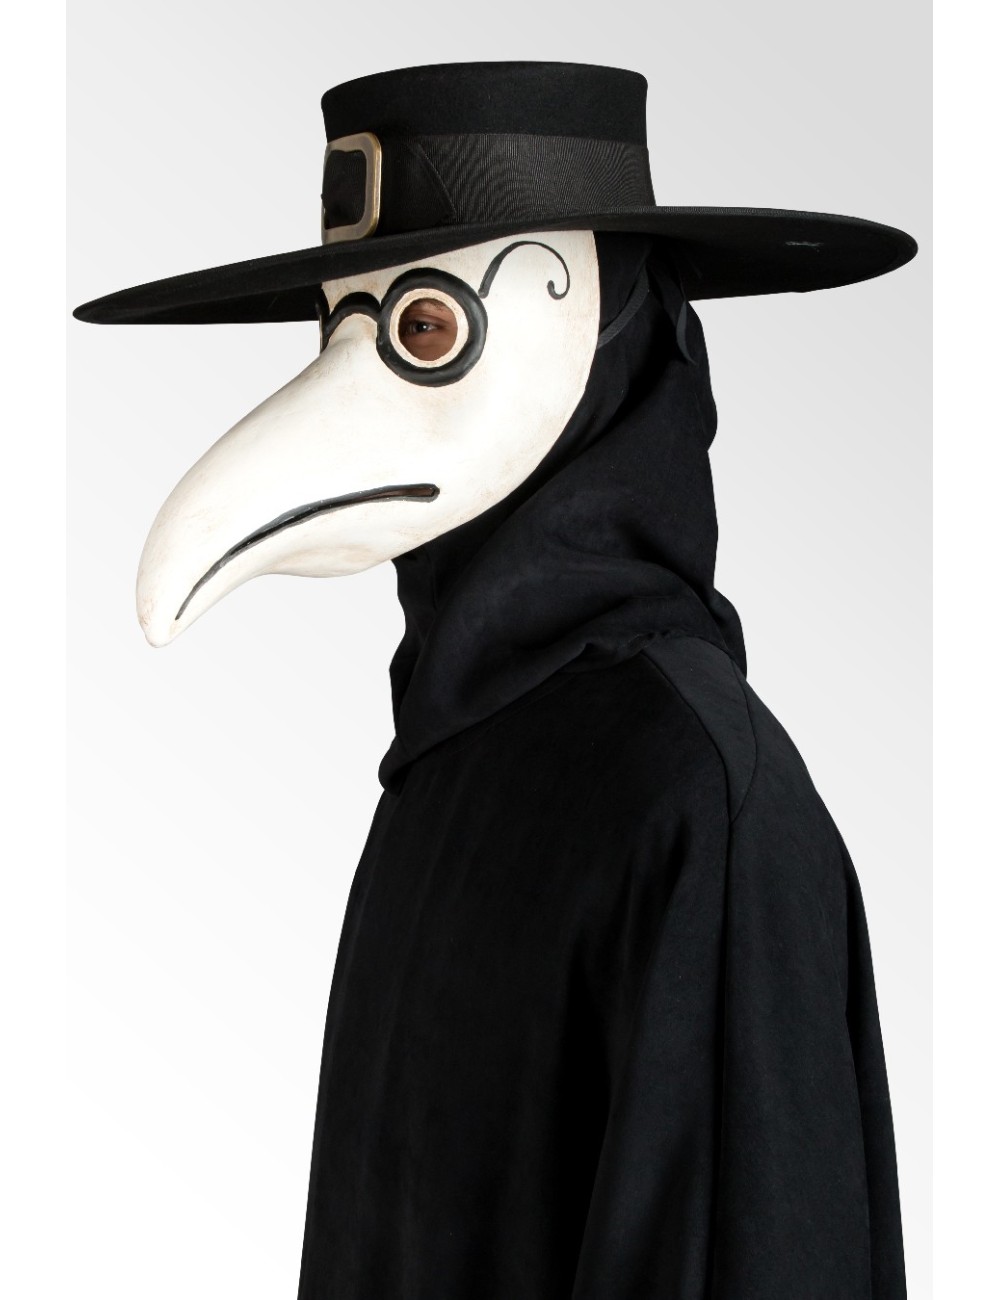 black plague doctor mask real